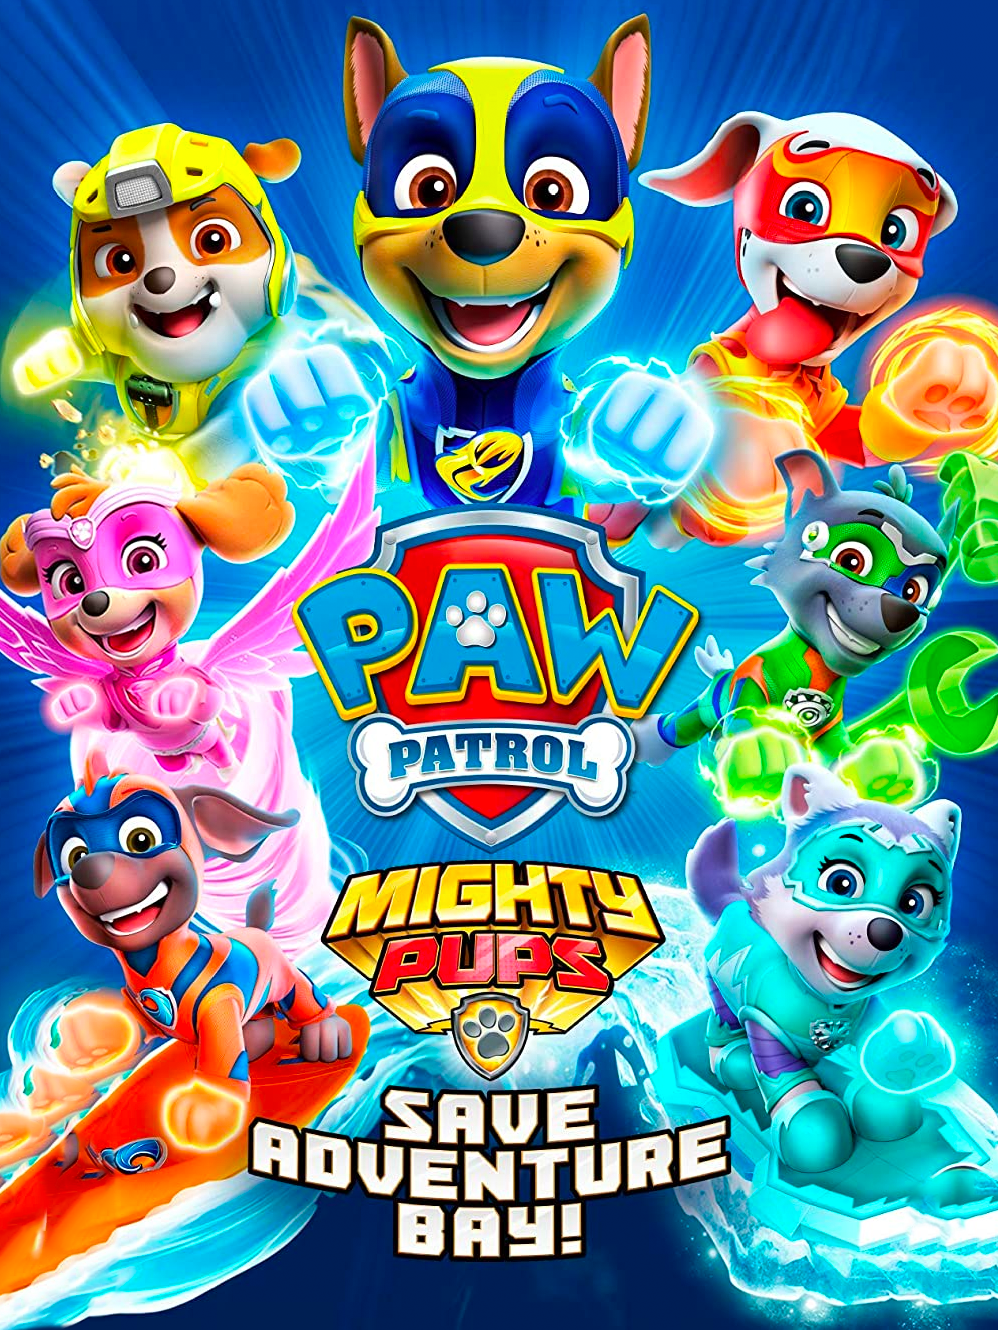 Patrol Pups: Save Adventure (2020) Bay! Mighty PAW